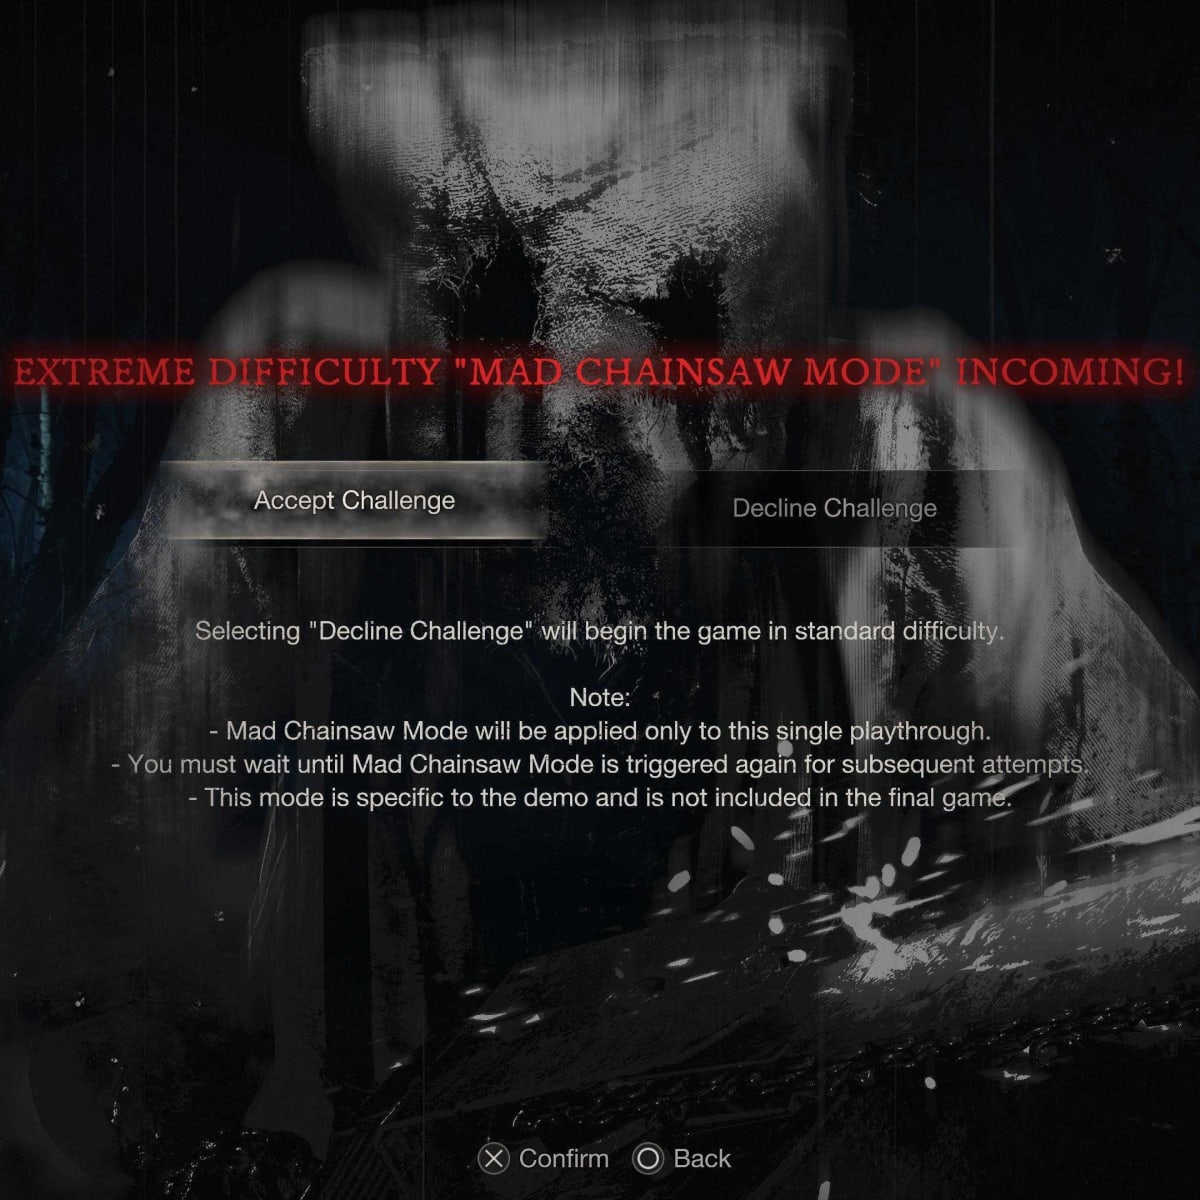 Resident Evil 4 Remake Chainsaw Demo Analysis/Speedrun - XStreamed